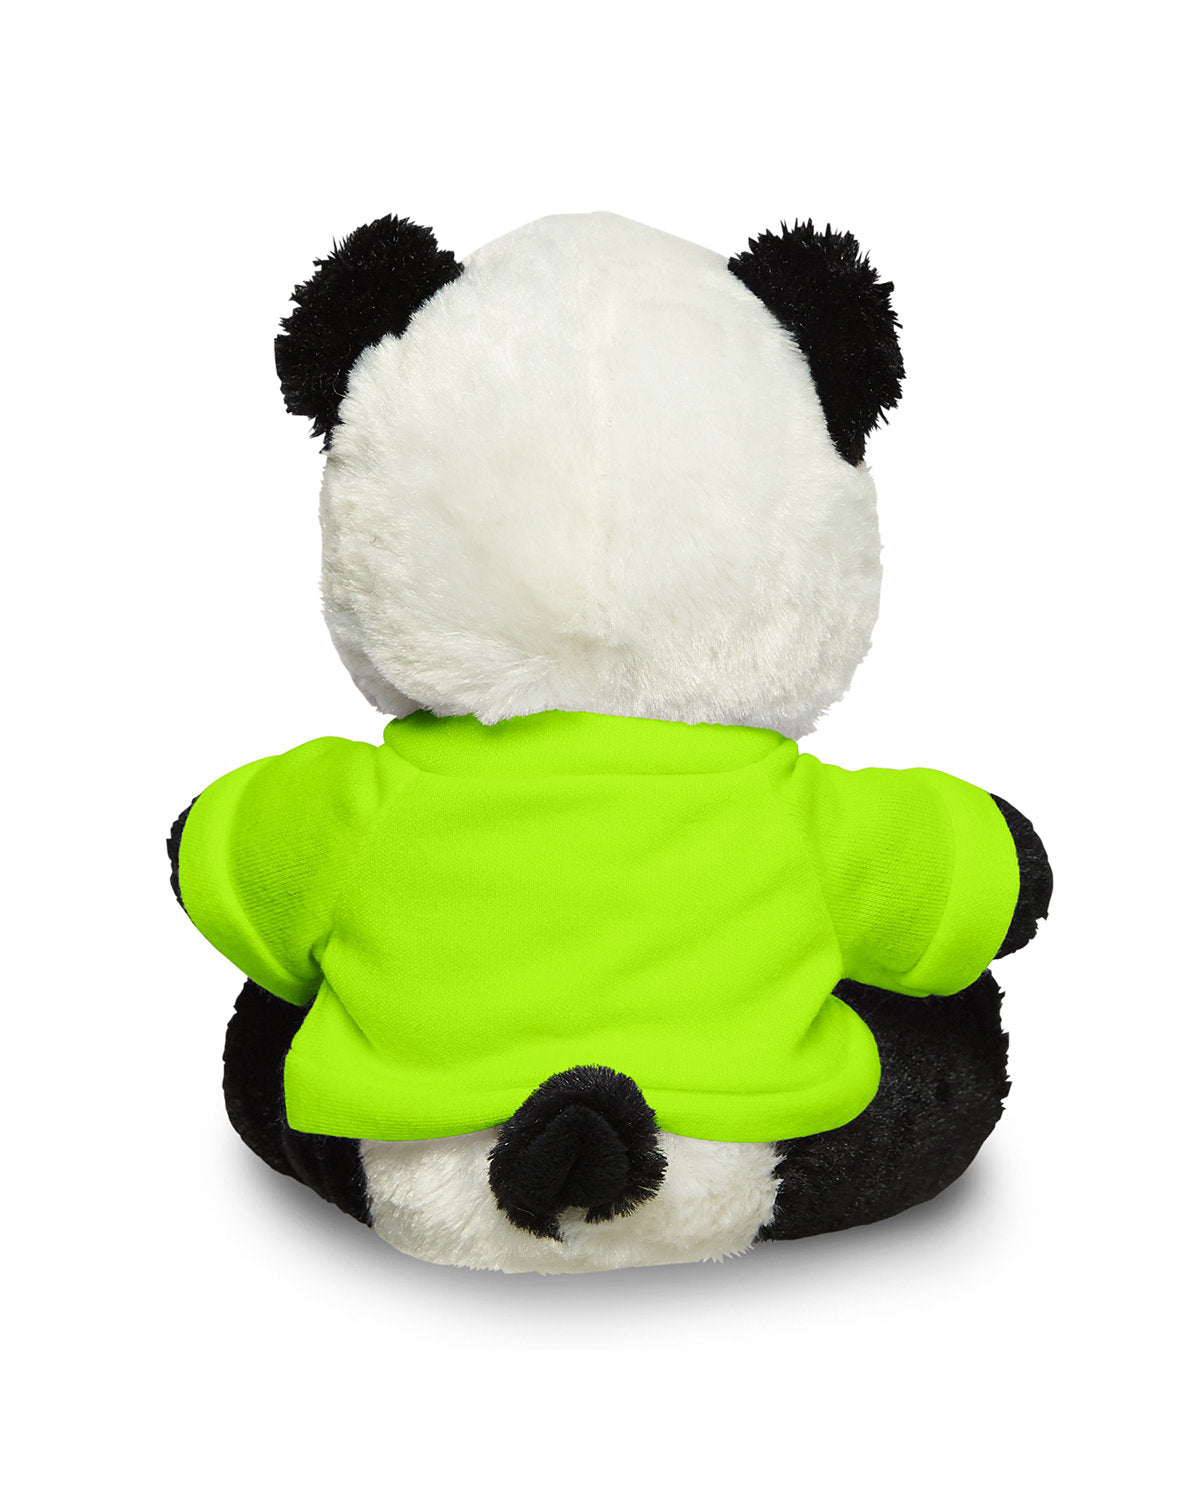 7" Plush Panda With T-Shirt